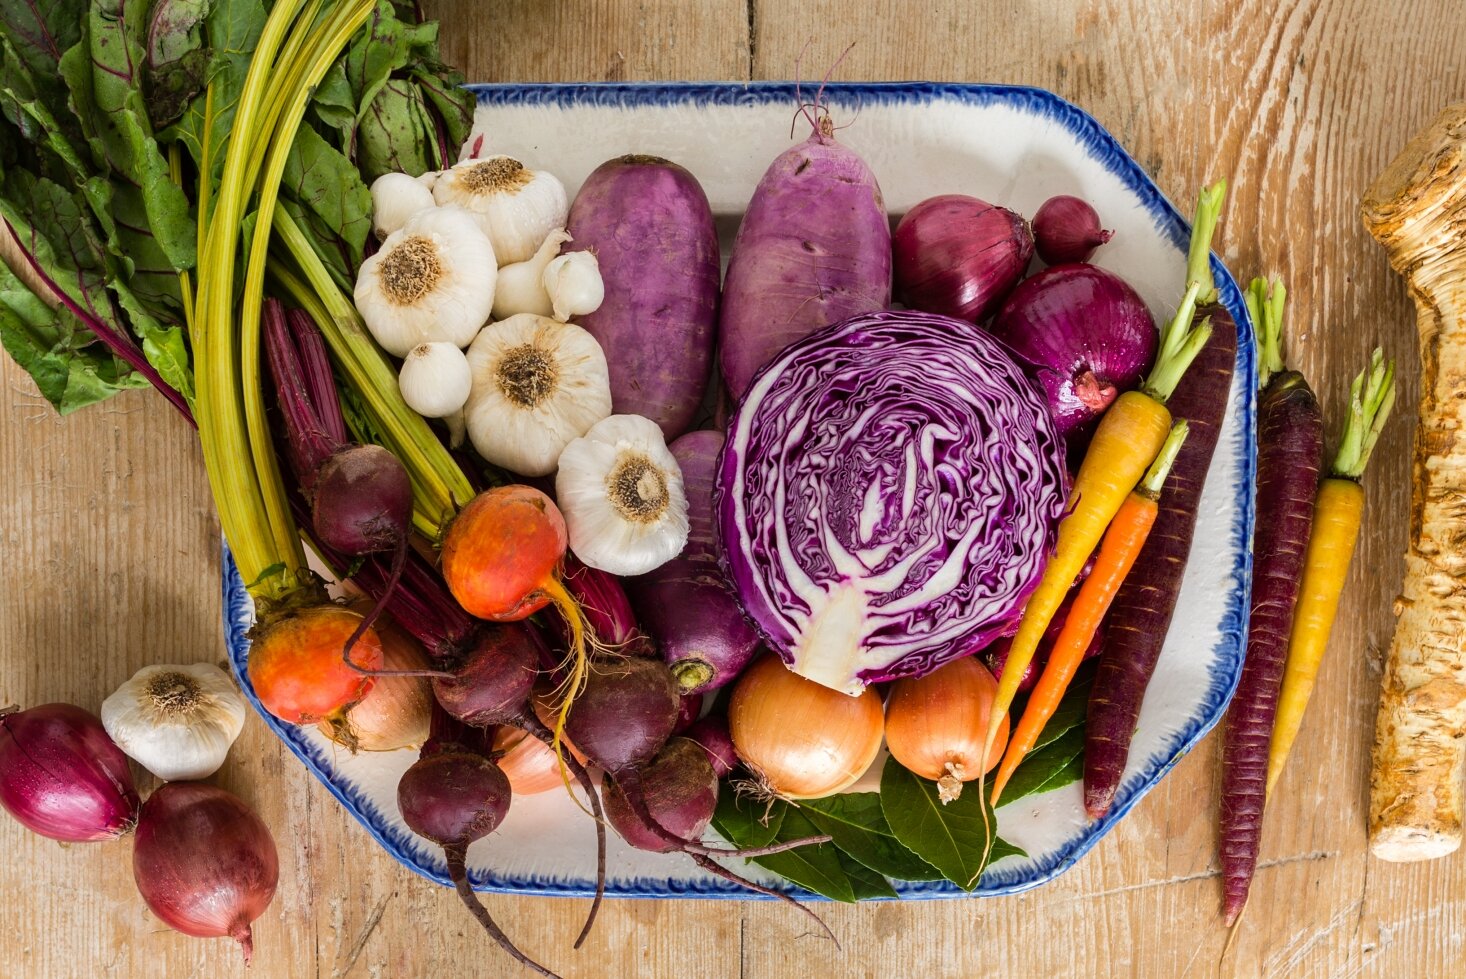 cabbage-beets-garlic-carrots-onions-marta-xochilt-perez-1466x979.jpg